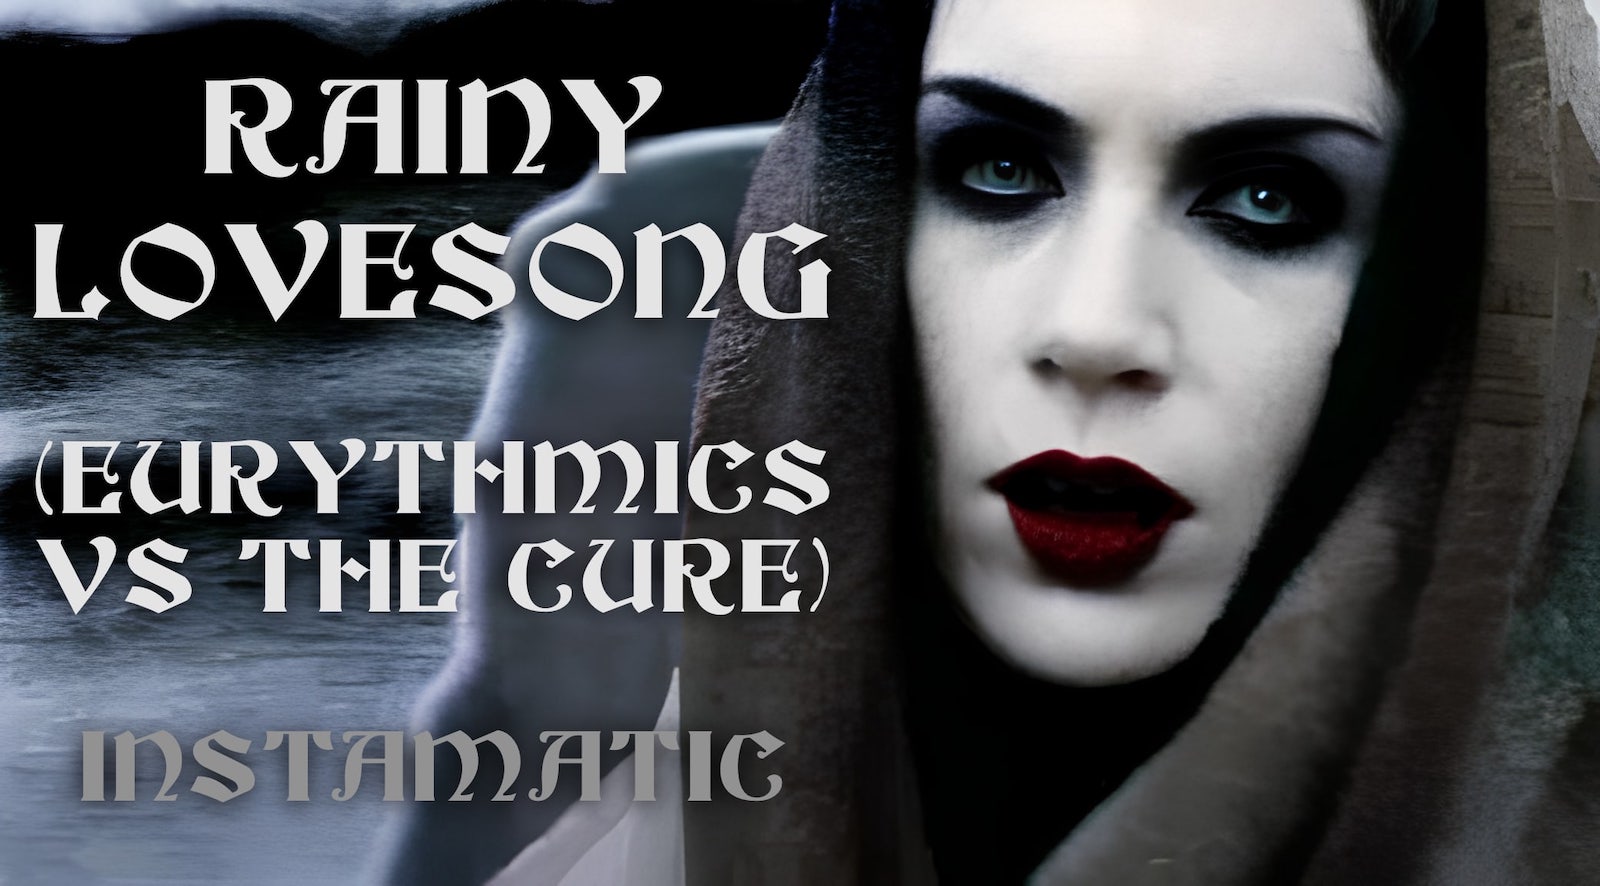 Instamatic - Rainy Lovesong (Eurythmics vs The Cure) mashup